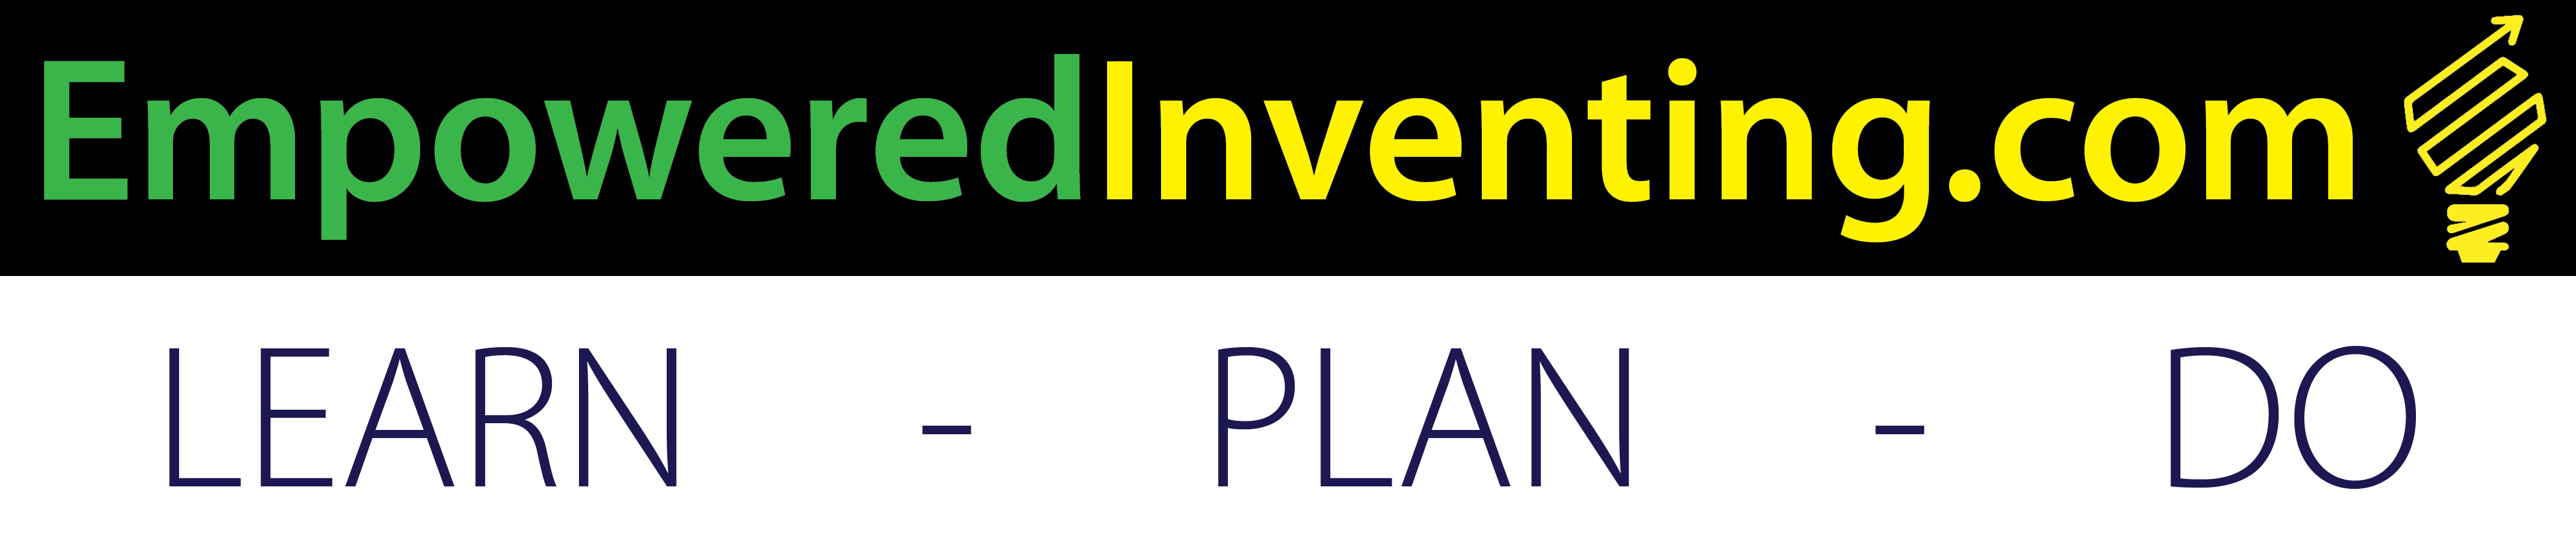 Empowered Inventing Logo